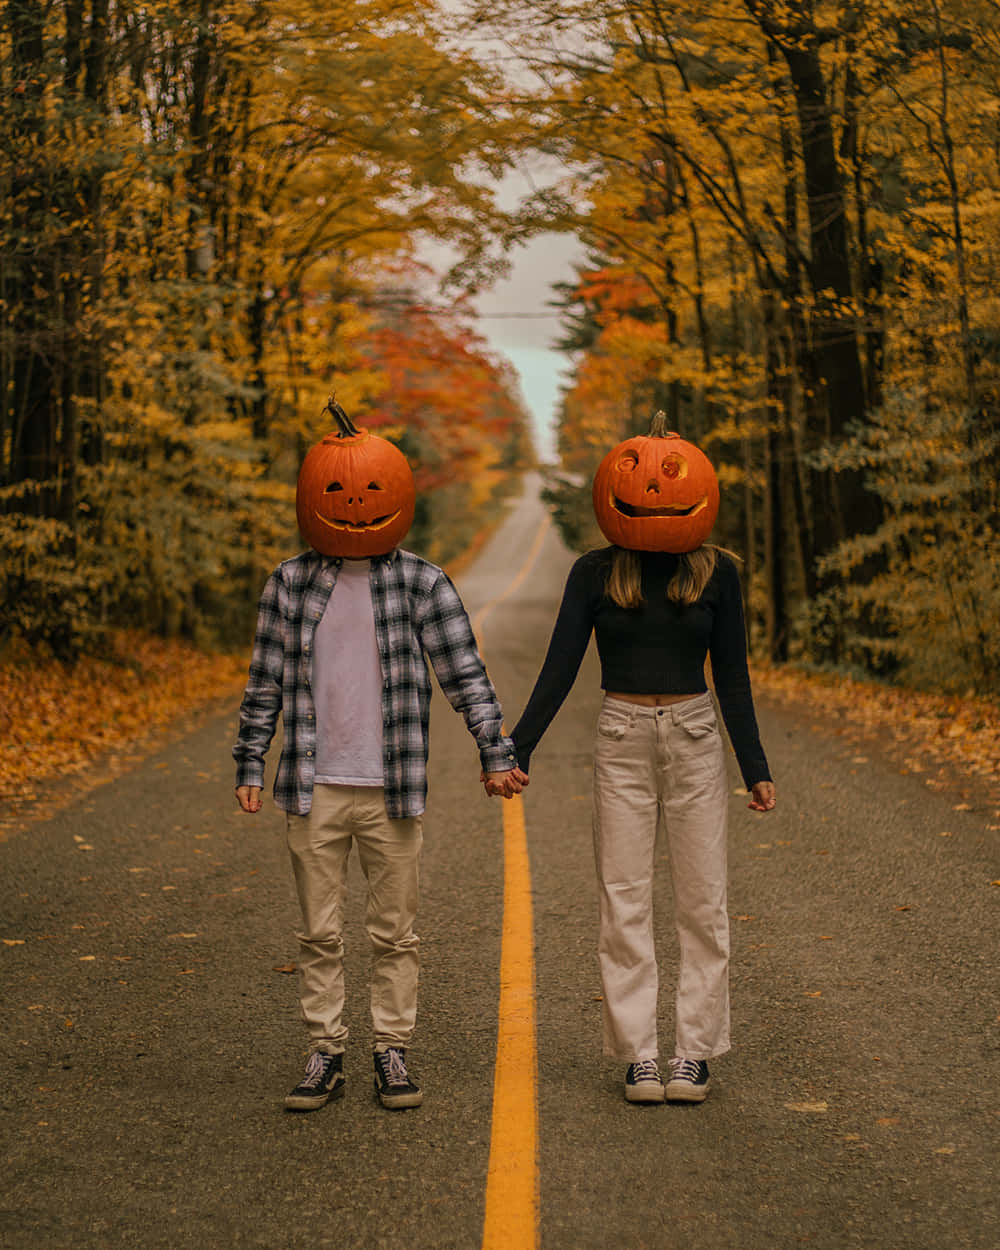 "Couple Embracing Autumn Halloween Spirit with Jack-o'-Lantern Masks" Wallpaper